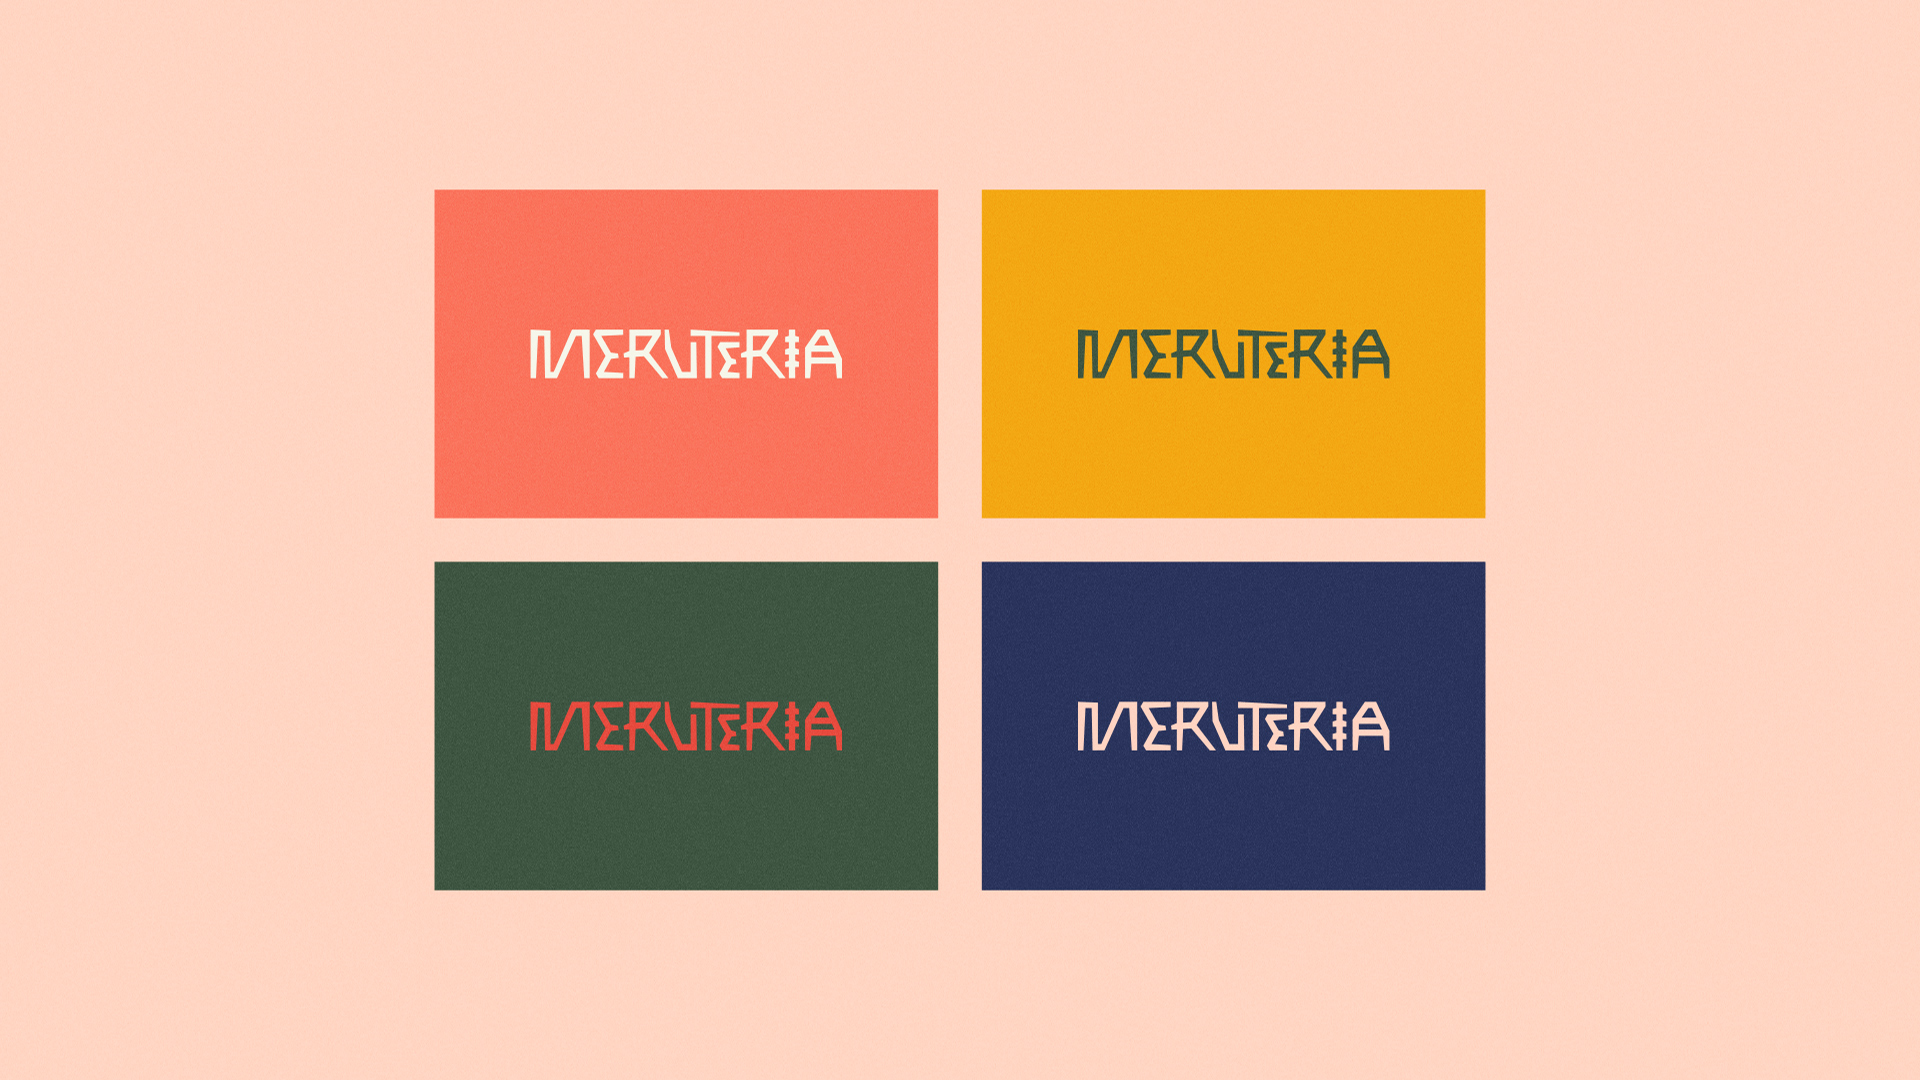 05_meruteria_sequence